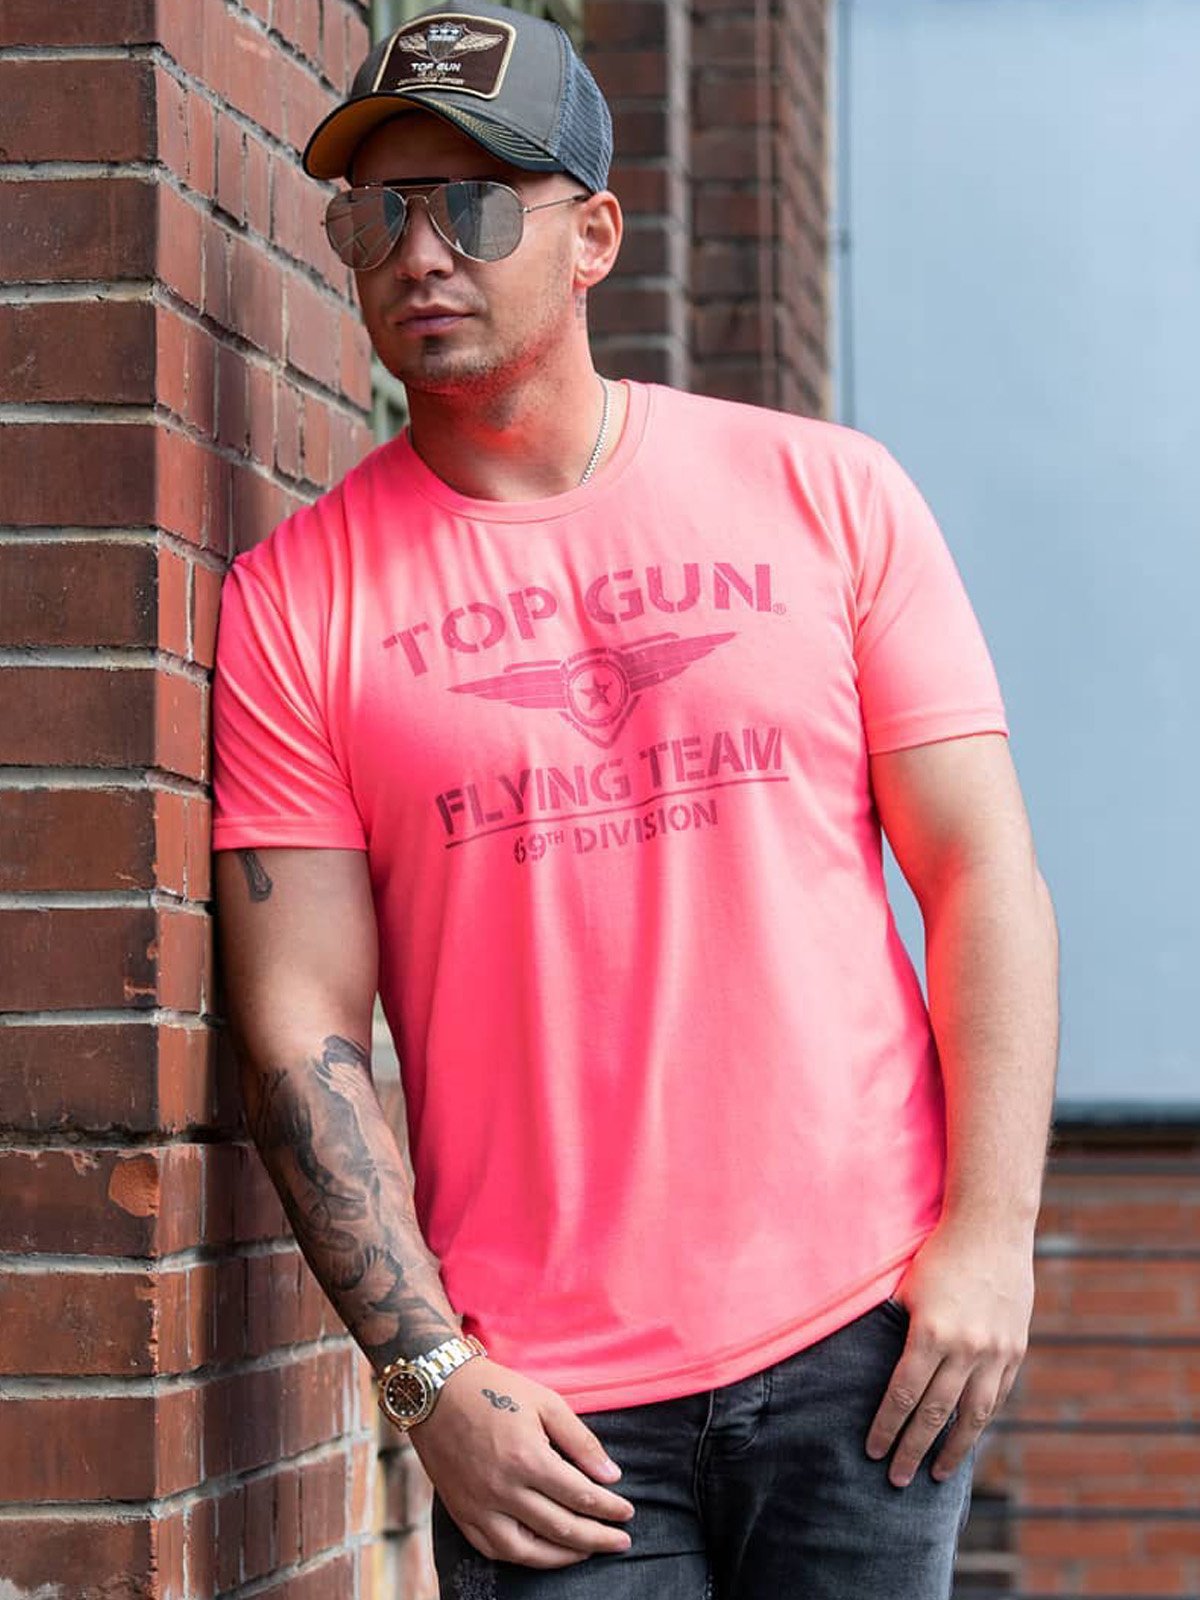 Top Gun t-shirt, Top Gun shirt kopen | Stateshop Fashion